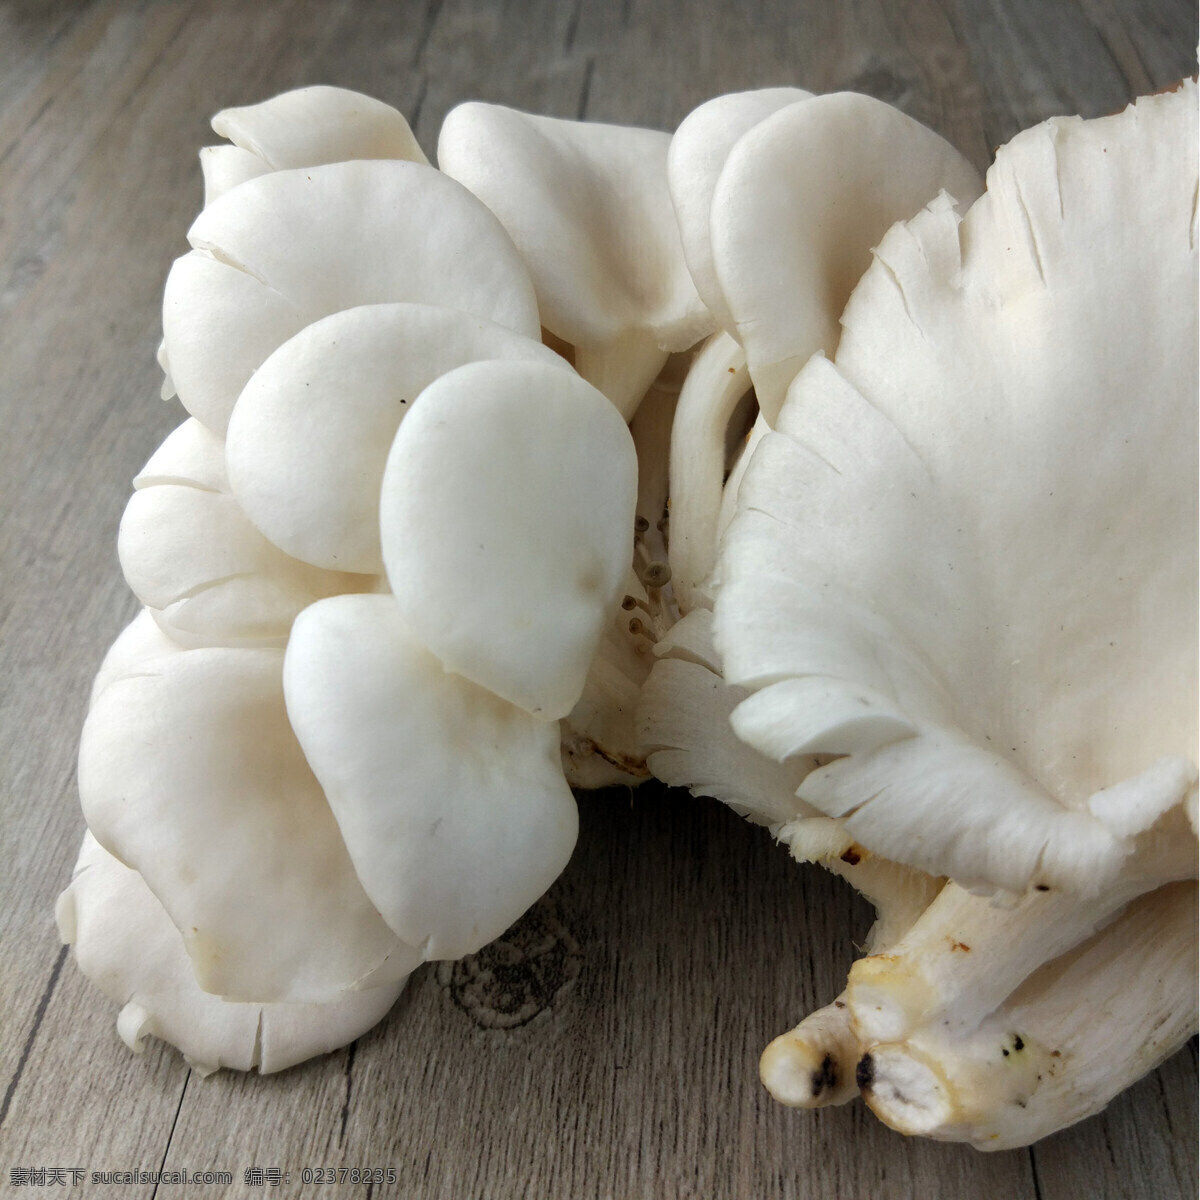 平菇 鲜平菇 蘑菇 菇 白菇 生物世界 蔬菜